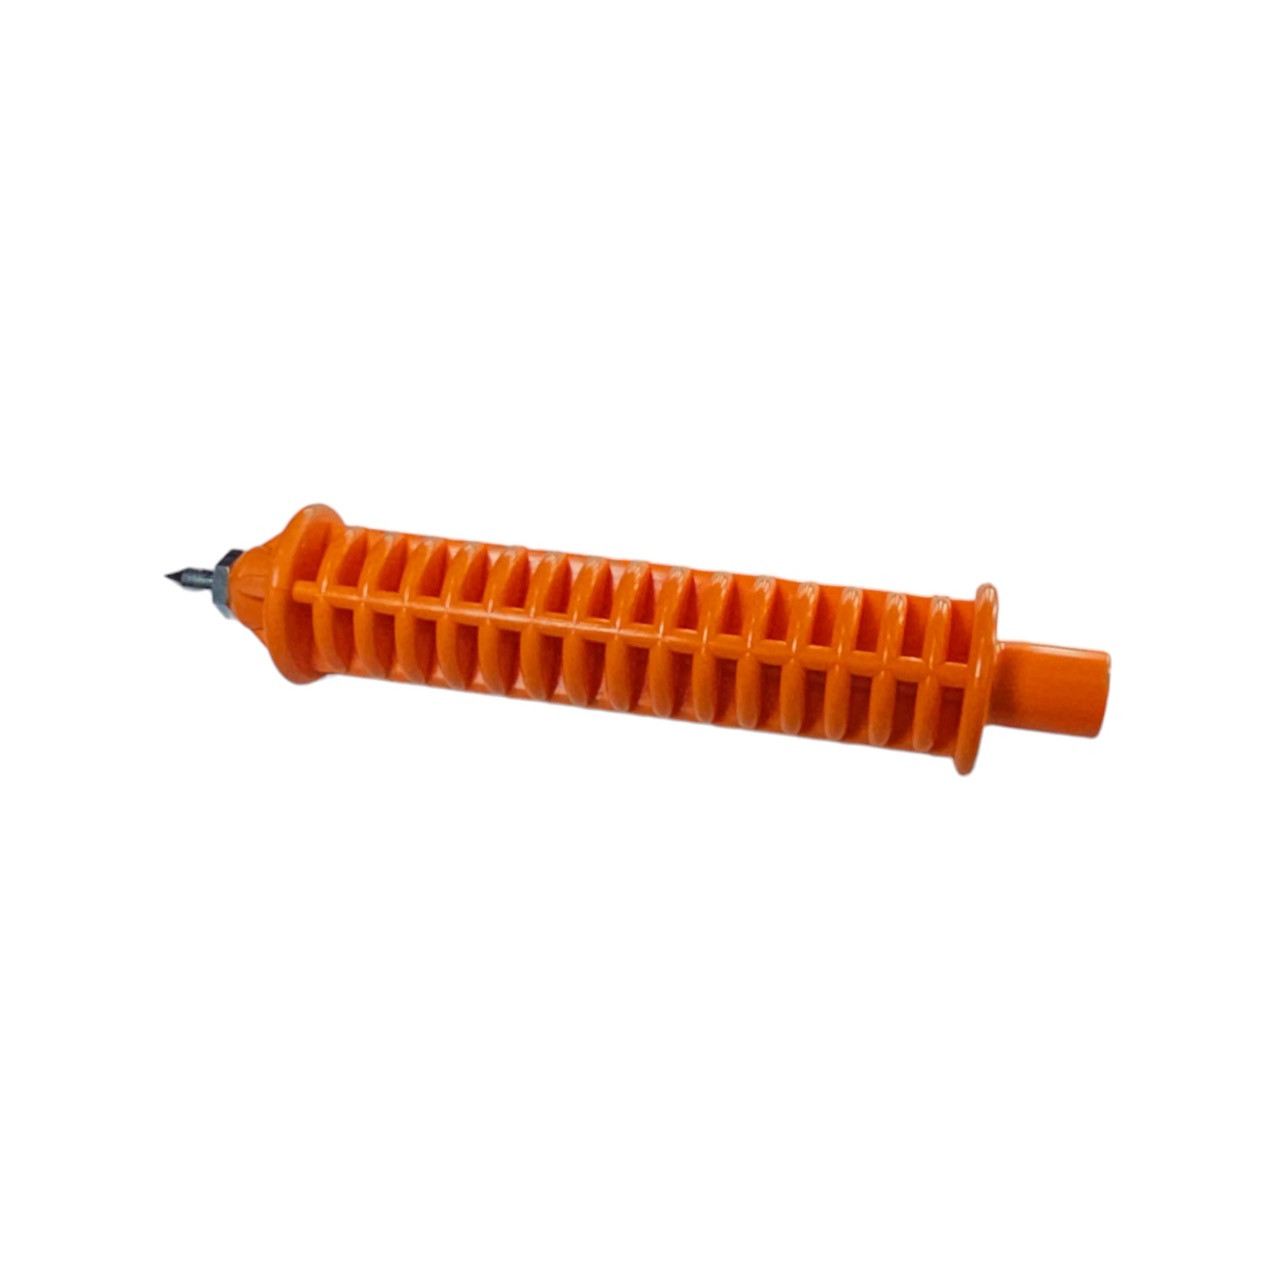 Mr. Nozzle Crevice Tool, Orange - fits 1.5 inch hose